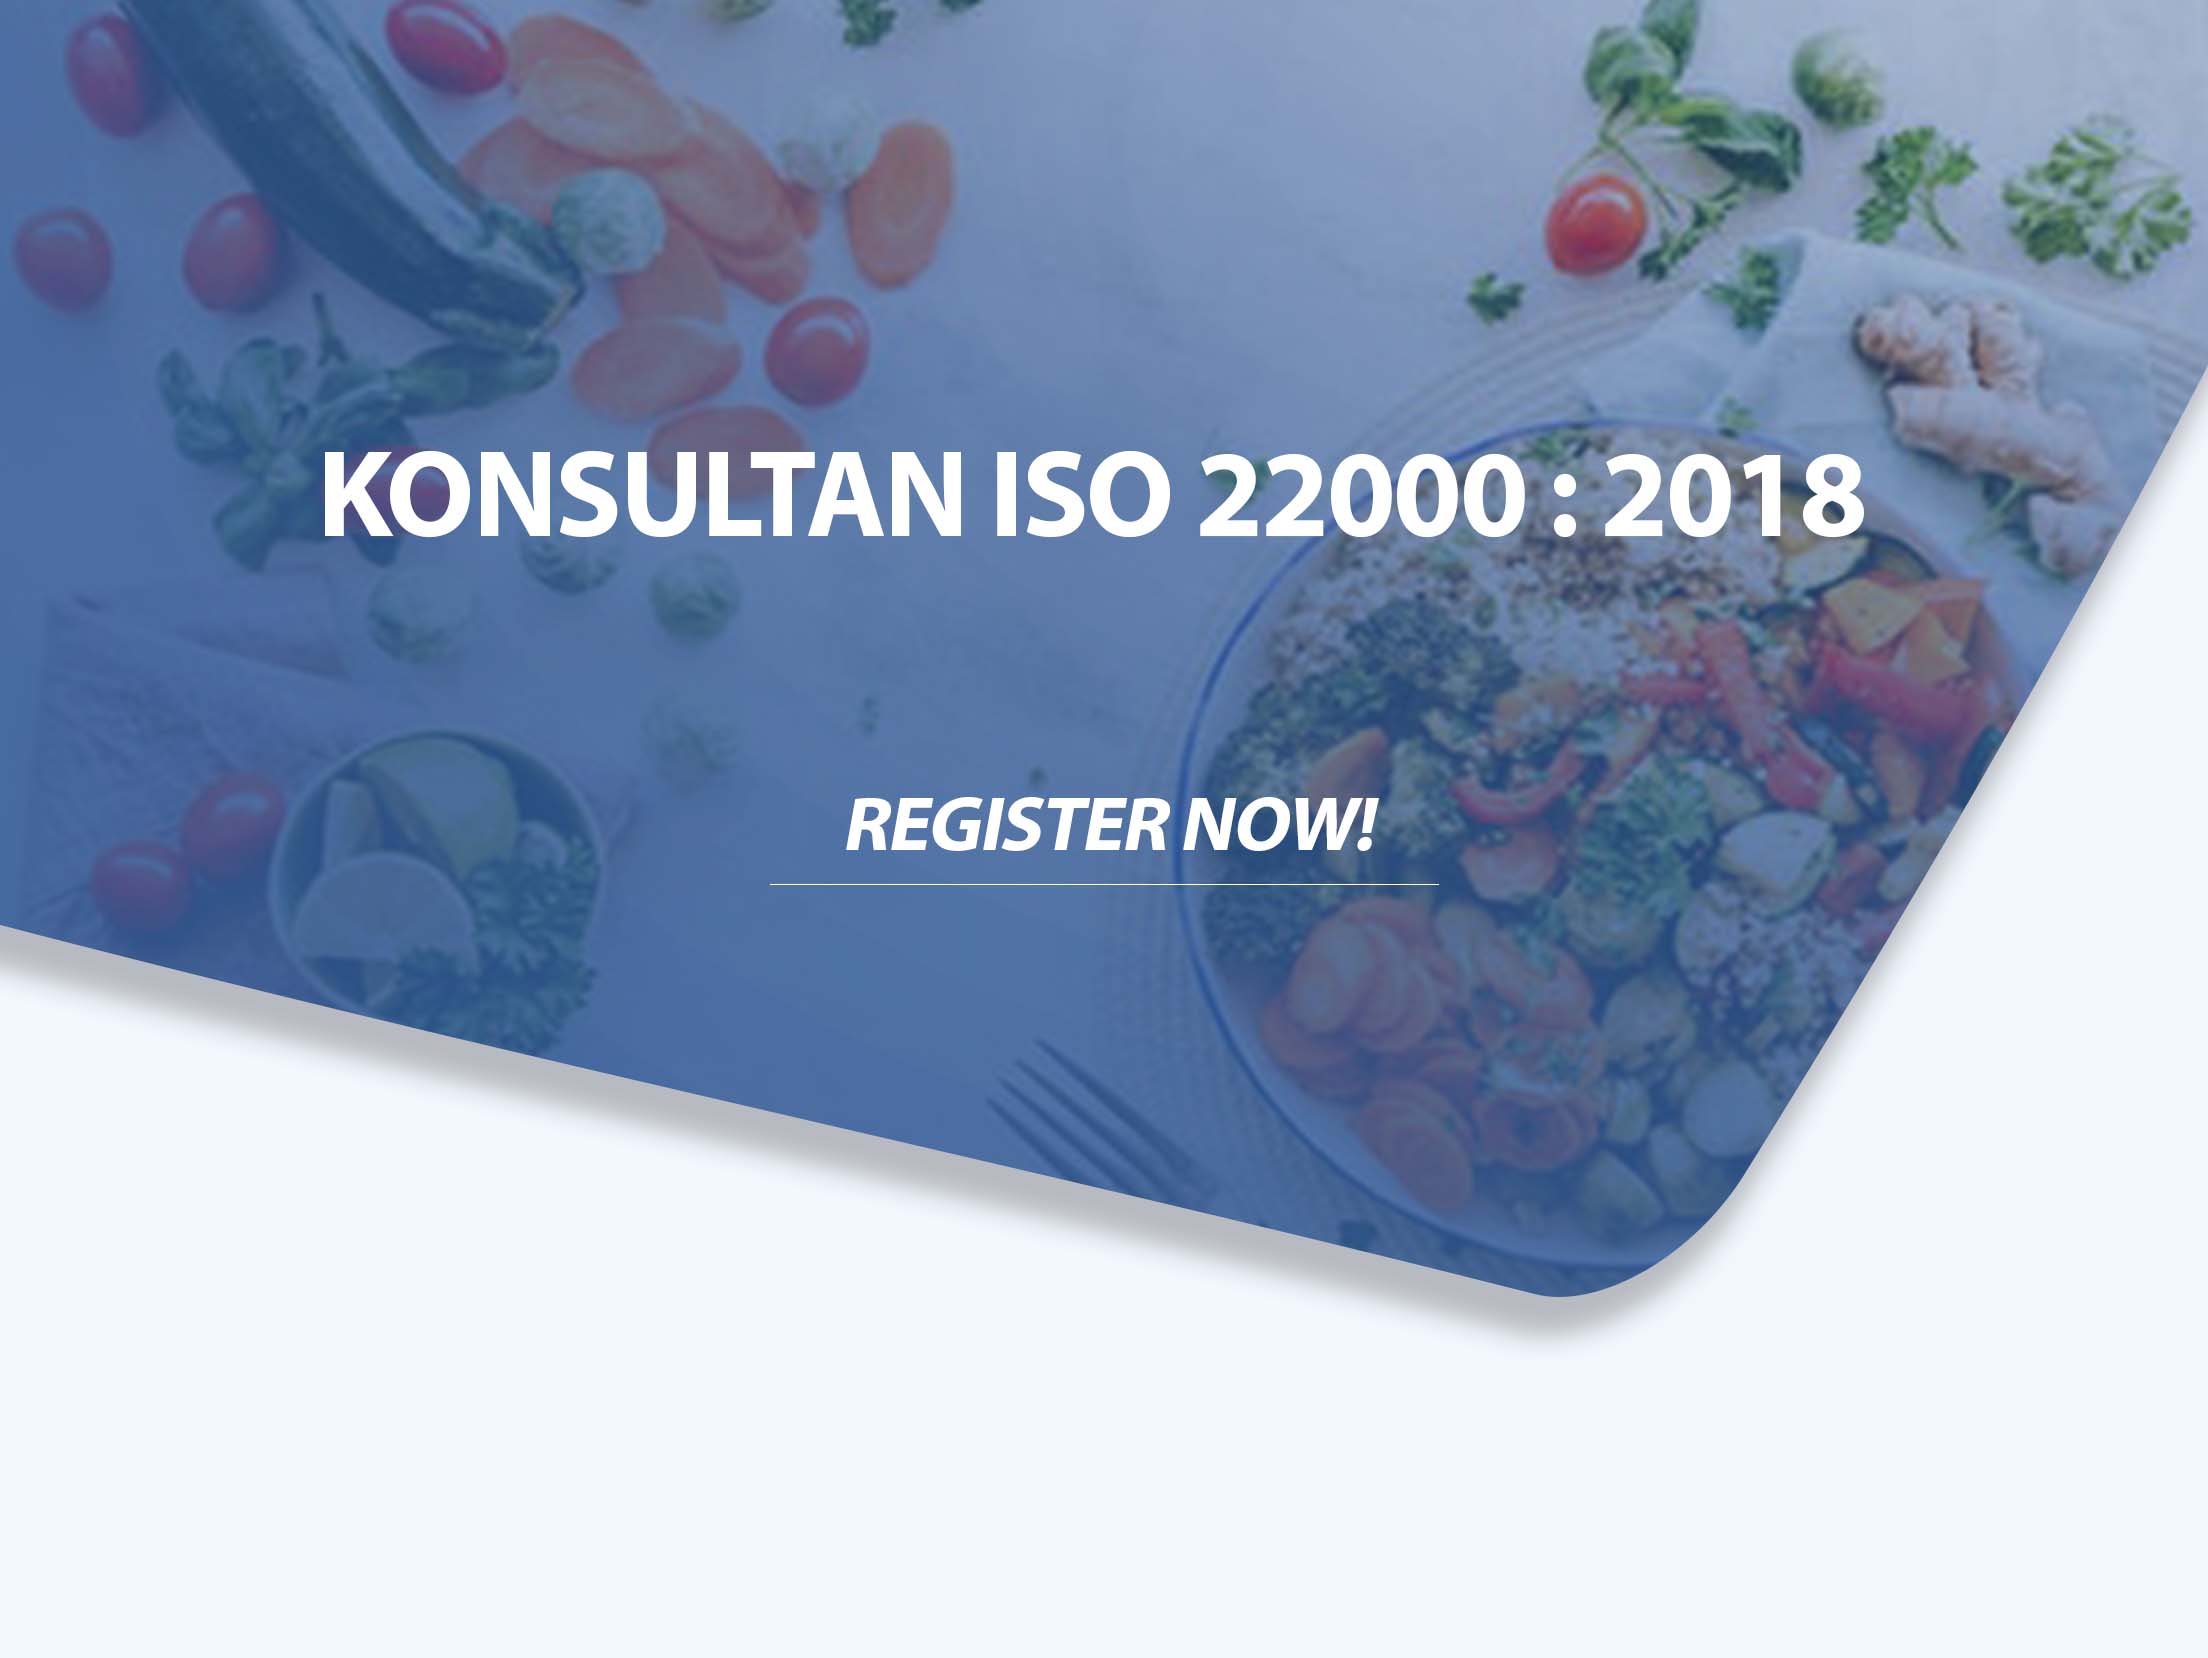 KONSULTAN ISO 22000 2018